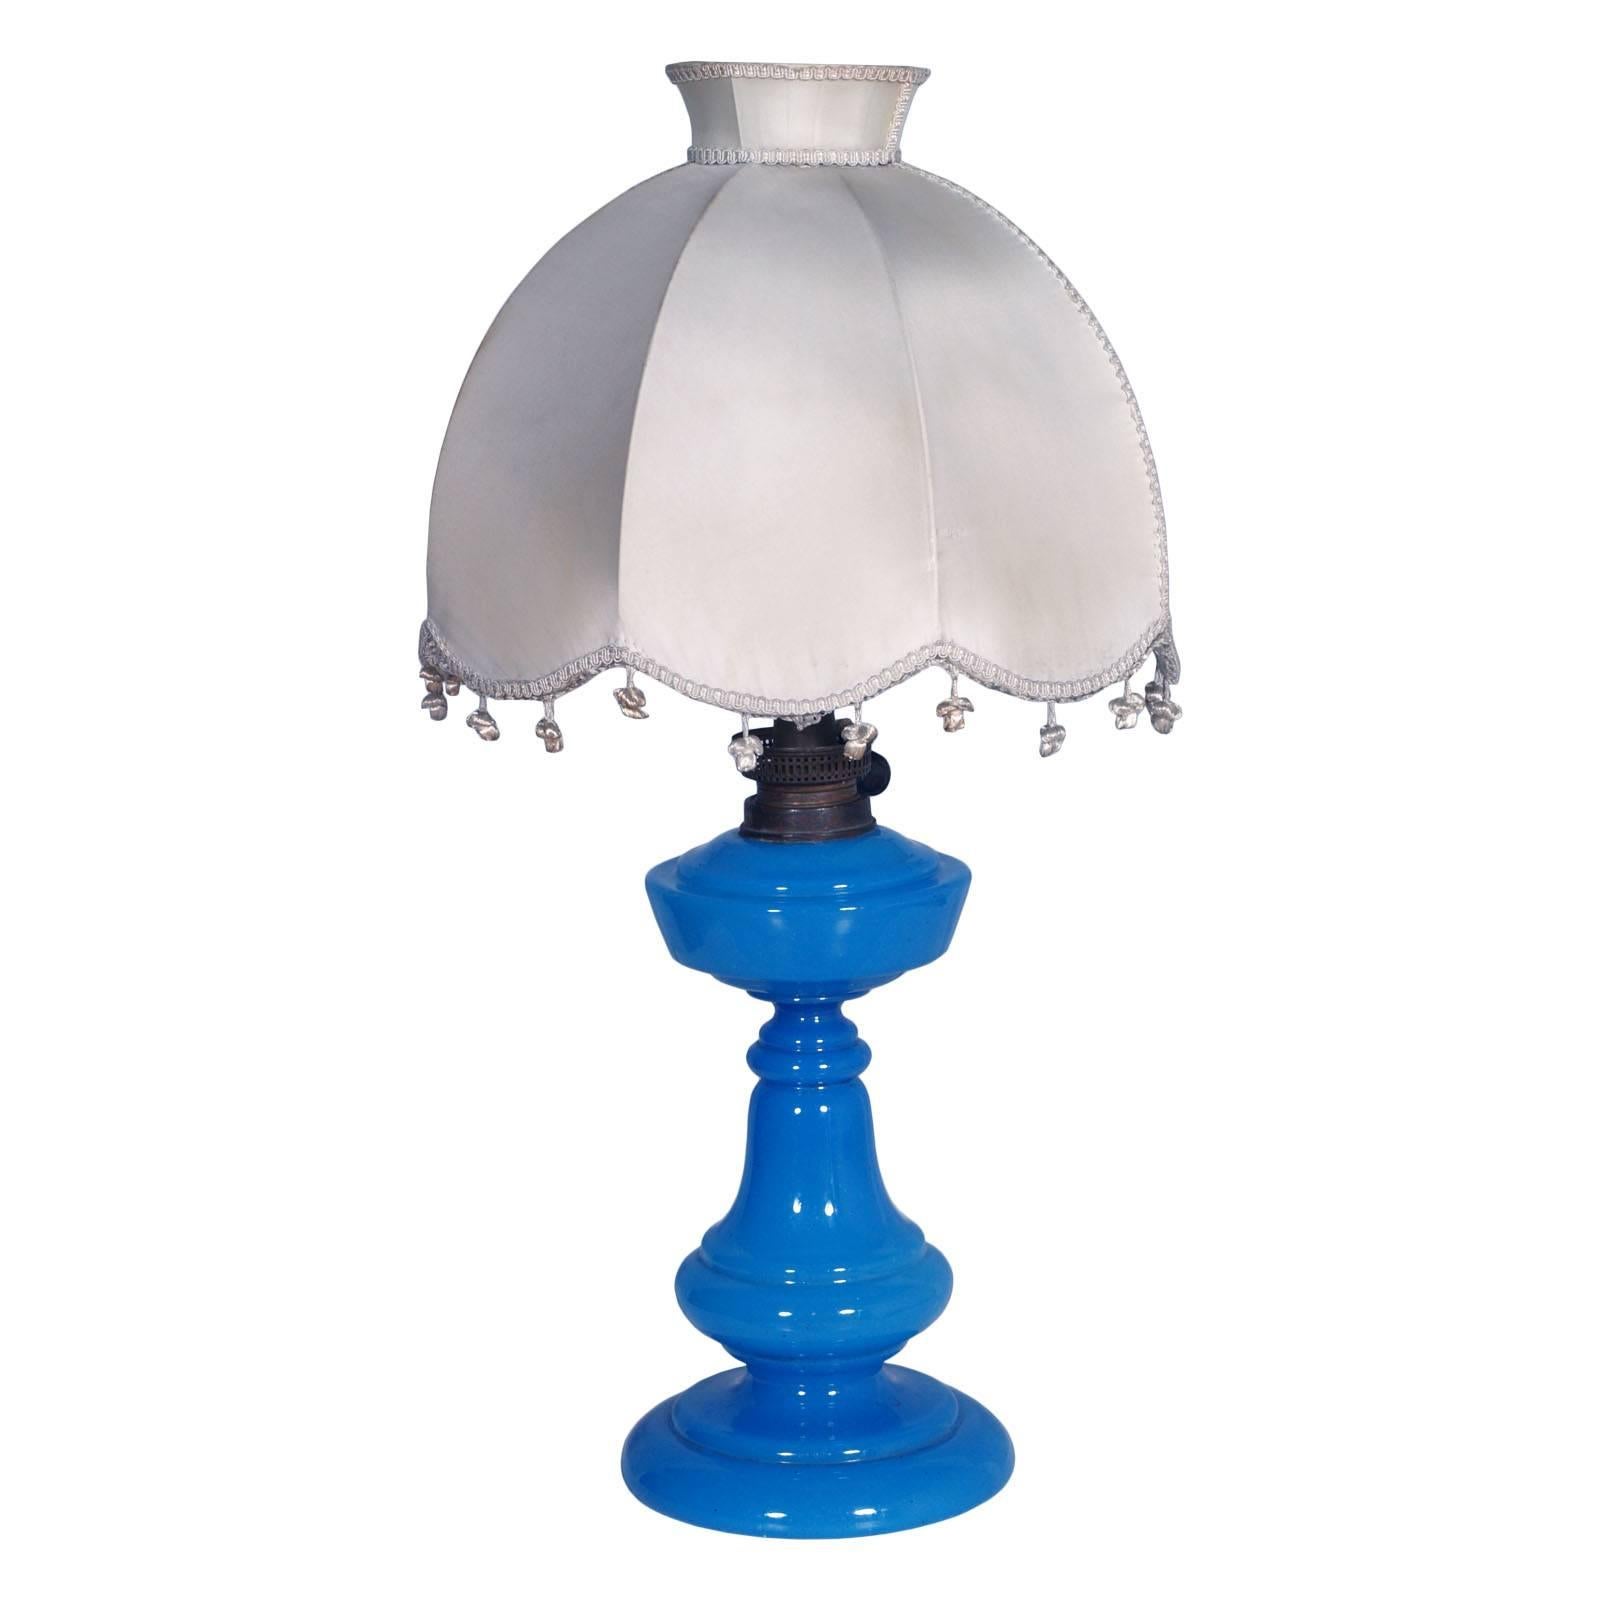 Art Deco Murano Glass Table Lamp by Cappellin for Venini 1930 Blown Blue Glass